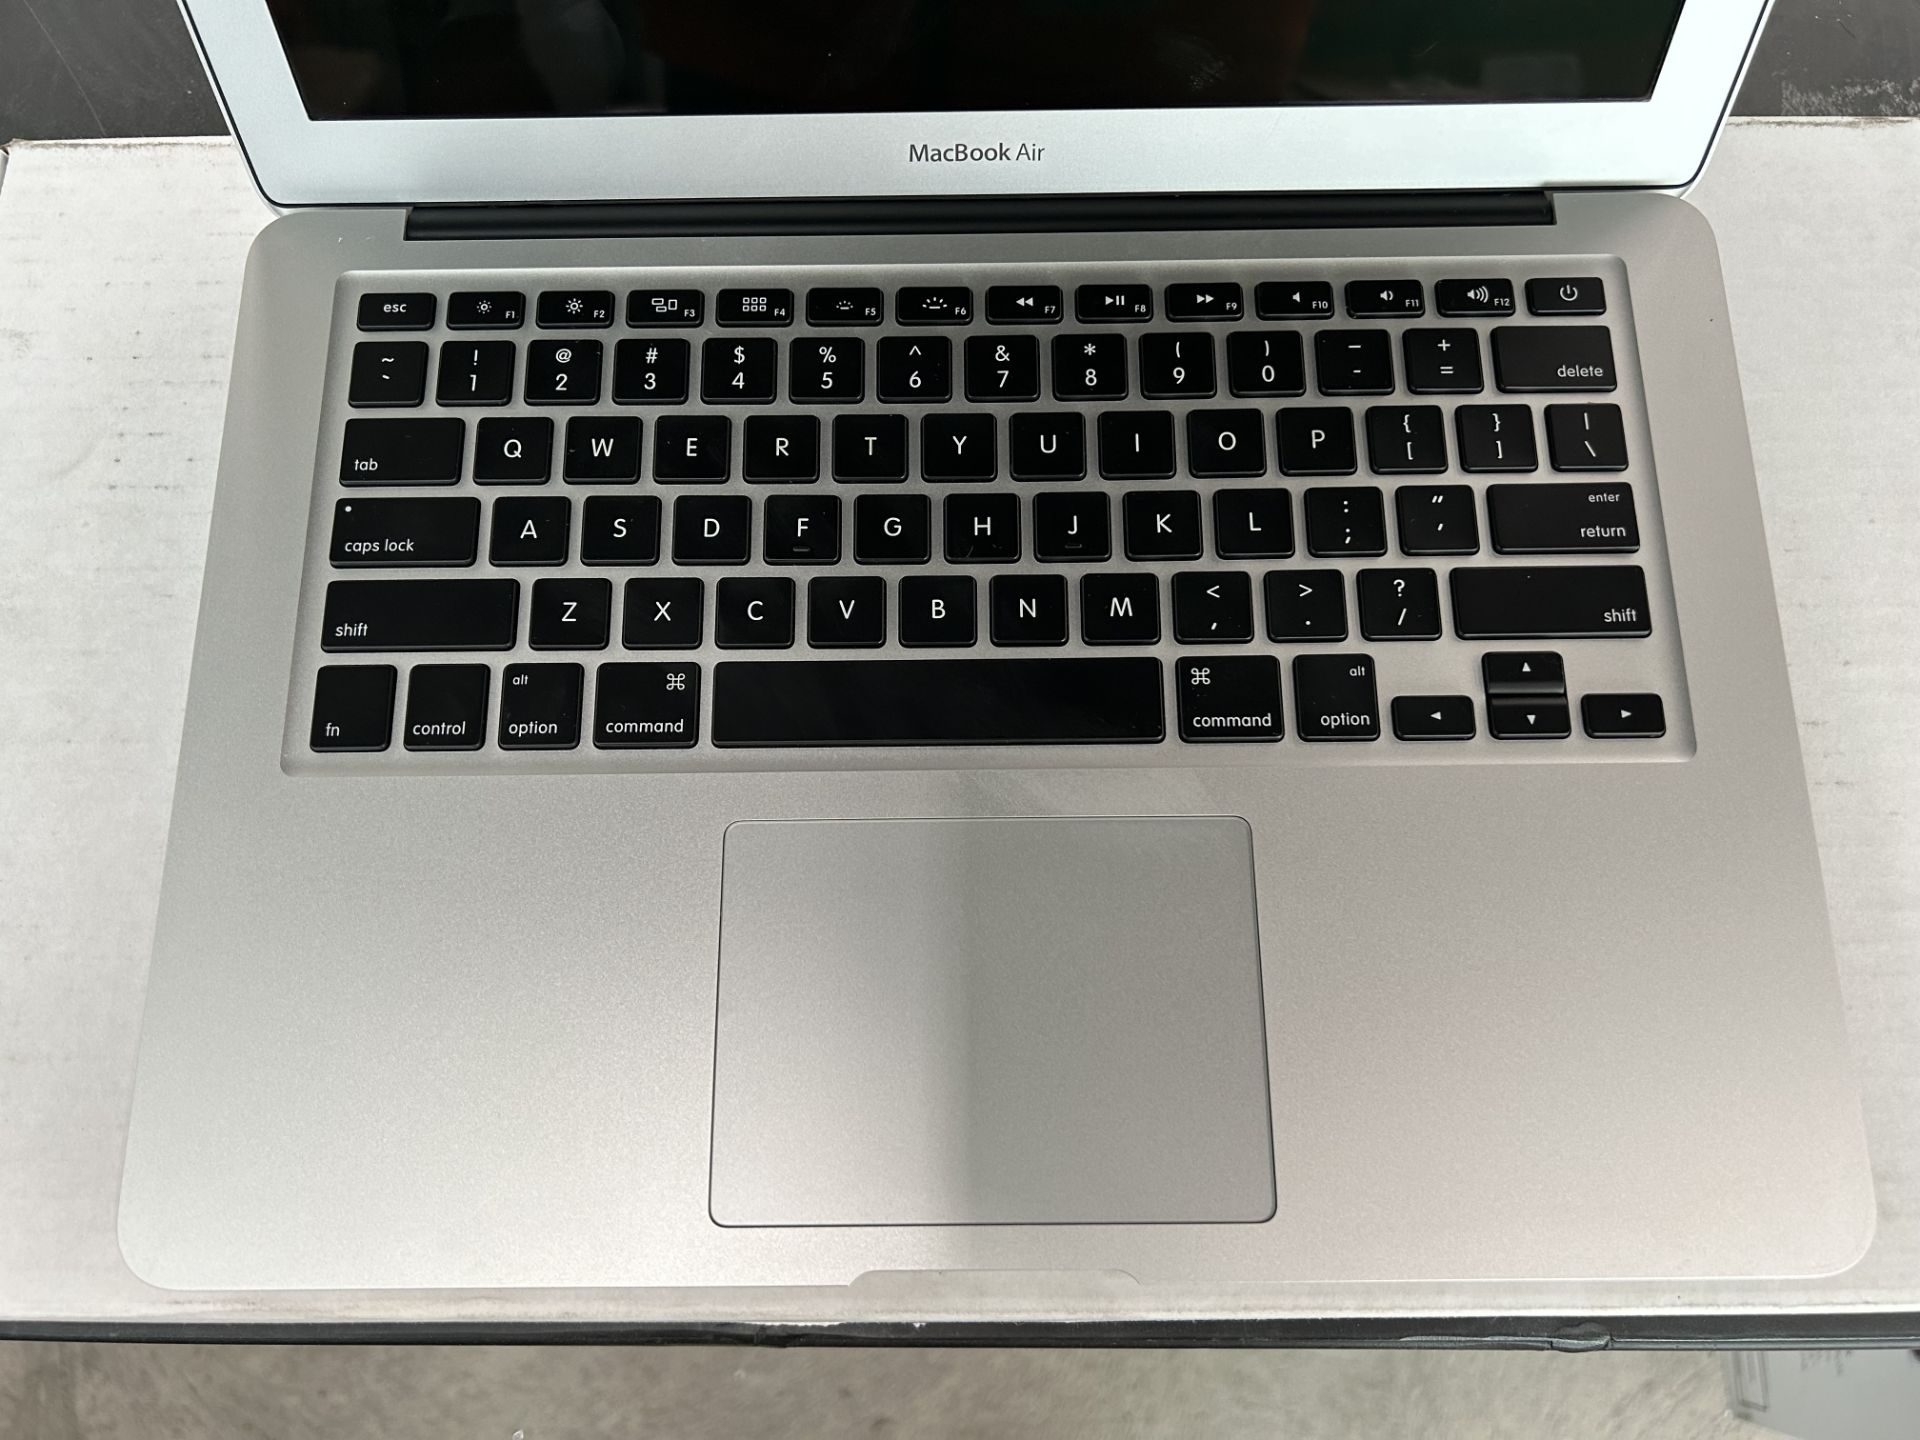 Computadora Apple MacBook Air 2017 Modelo A1466, Serie FVFD34QDJ1WK, Core i5, 8 Gb RAM, 128 SSD, Co - Image 3 of 7